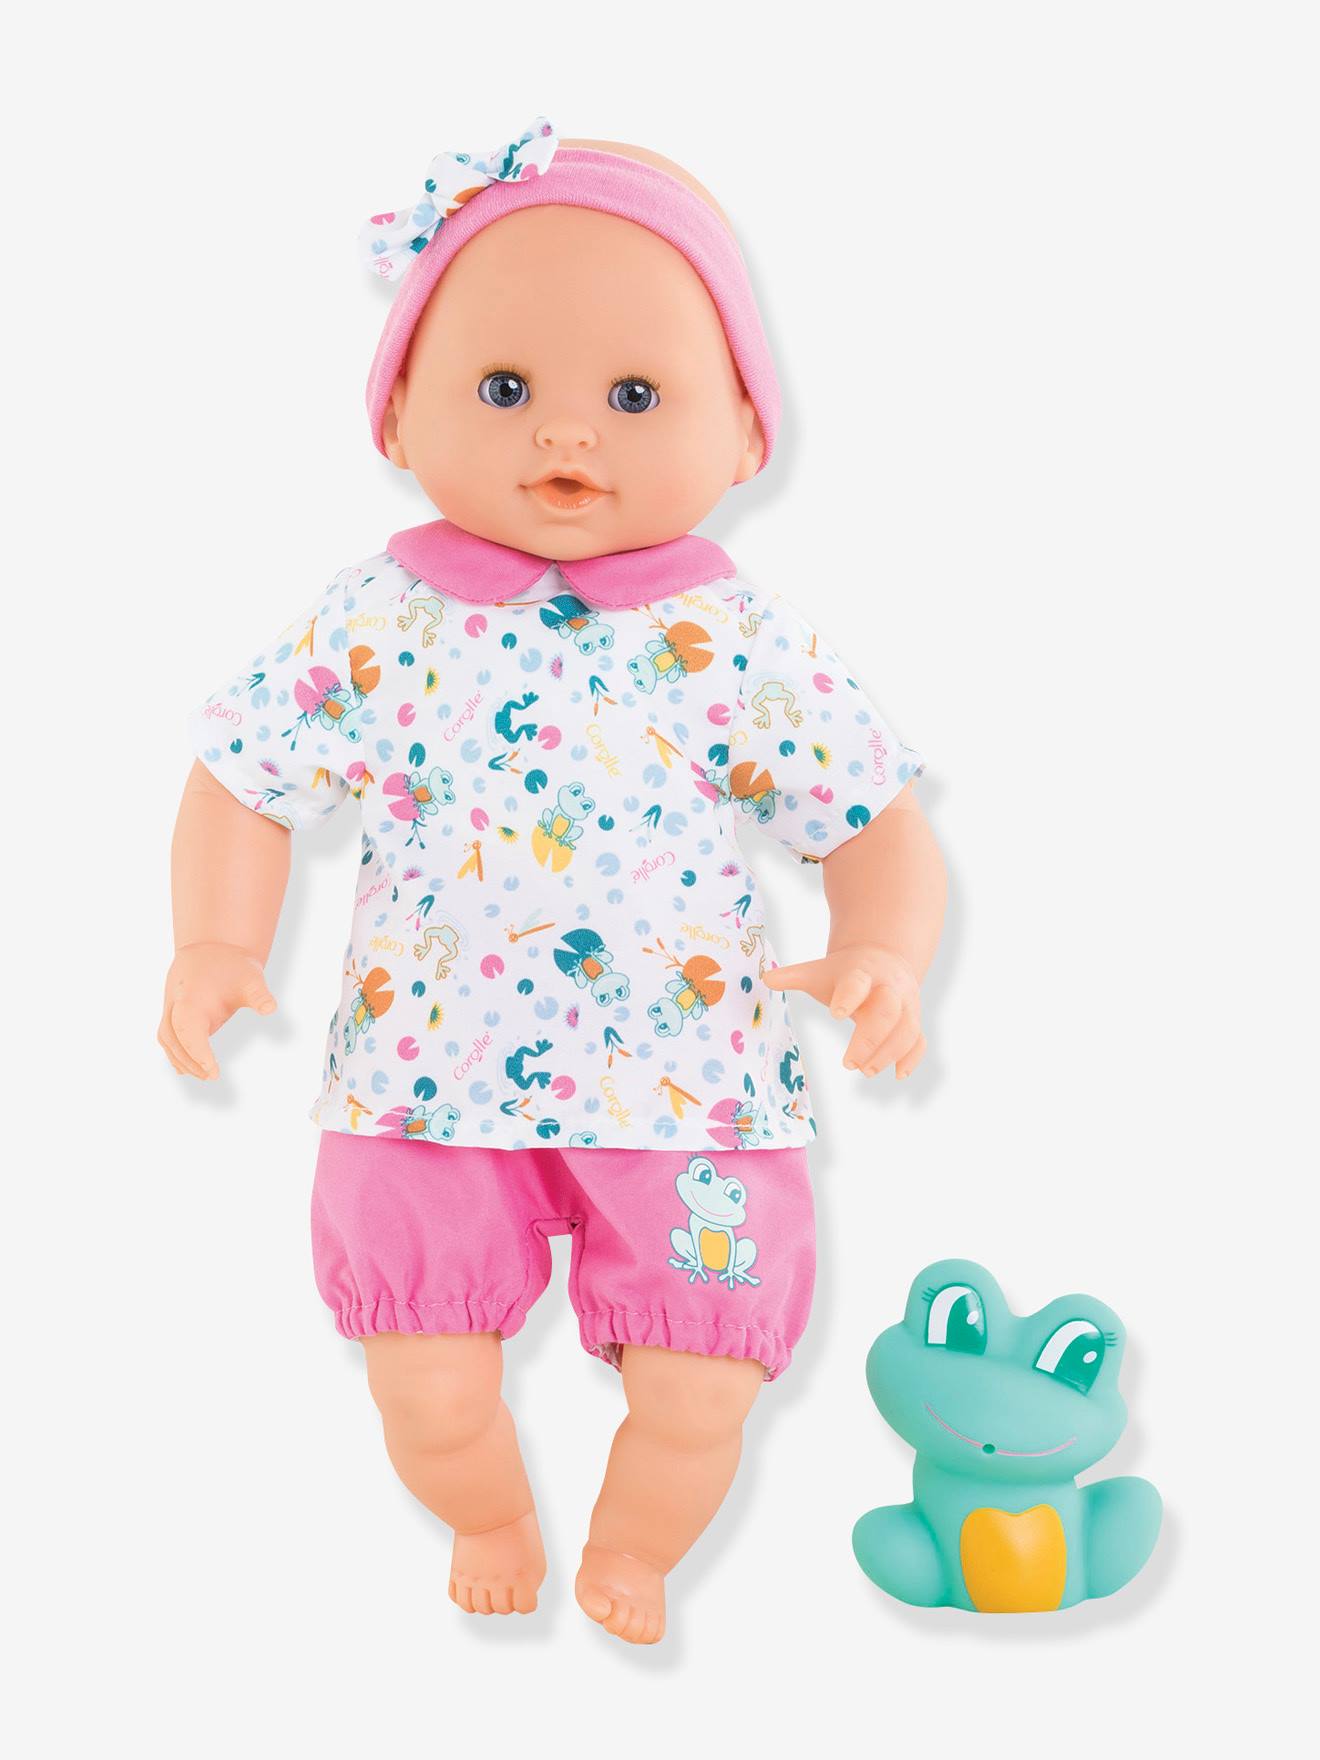 Baby Bath Oceane Doll, by COROLLE multicoloured